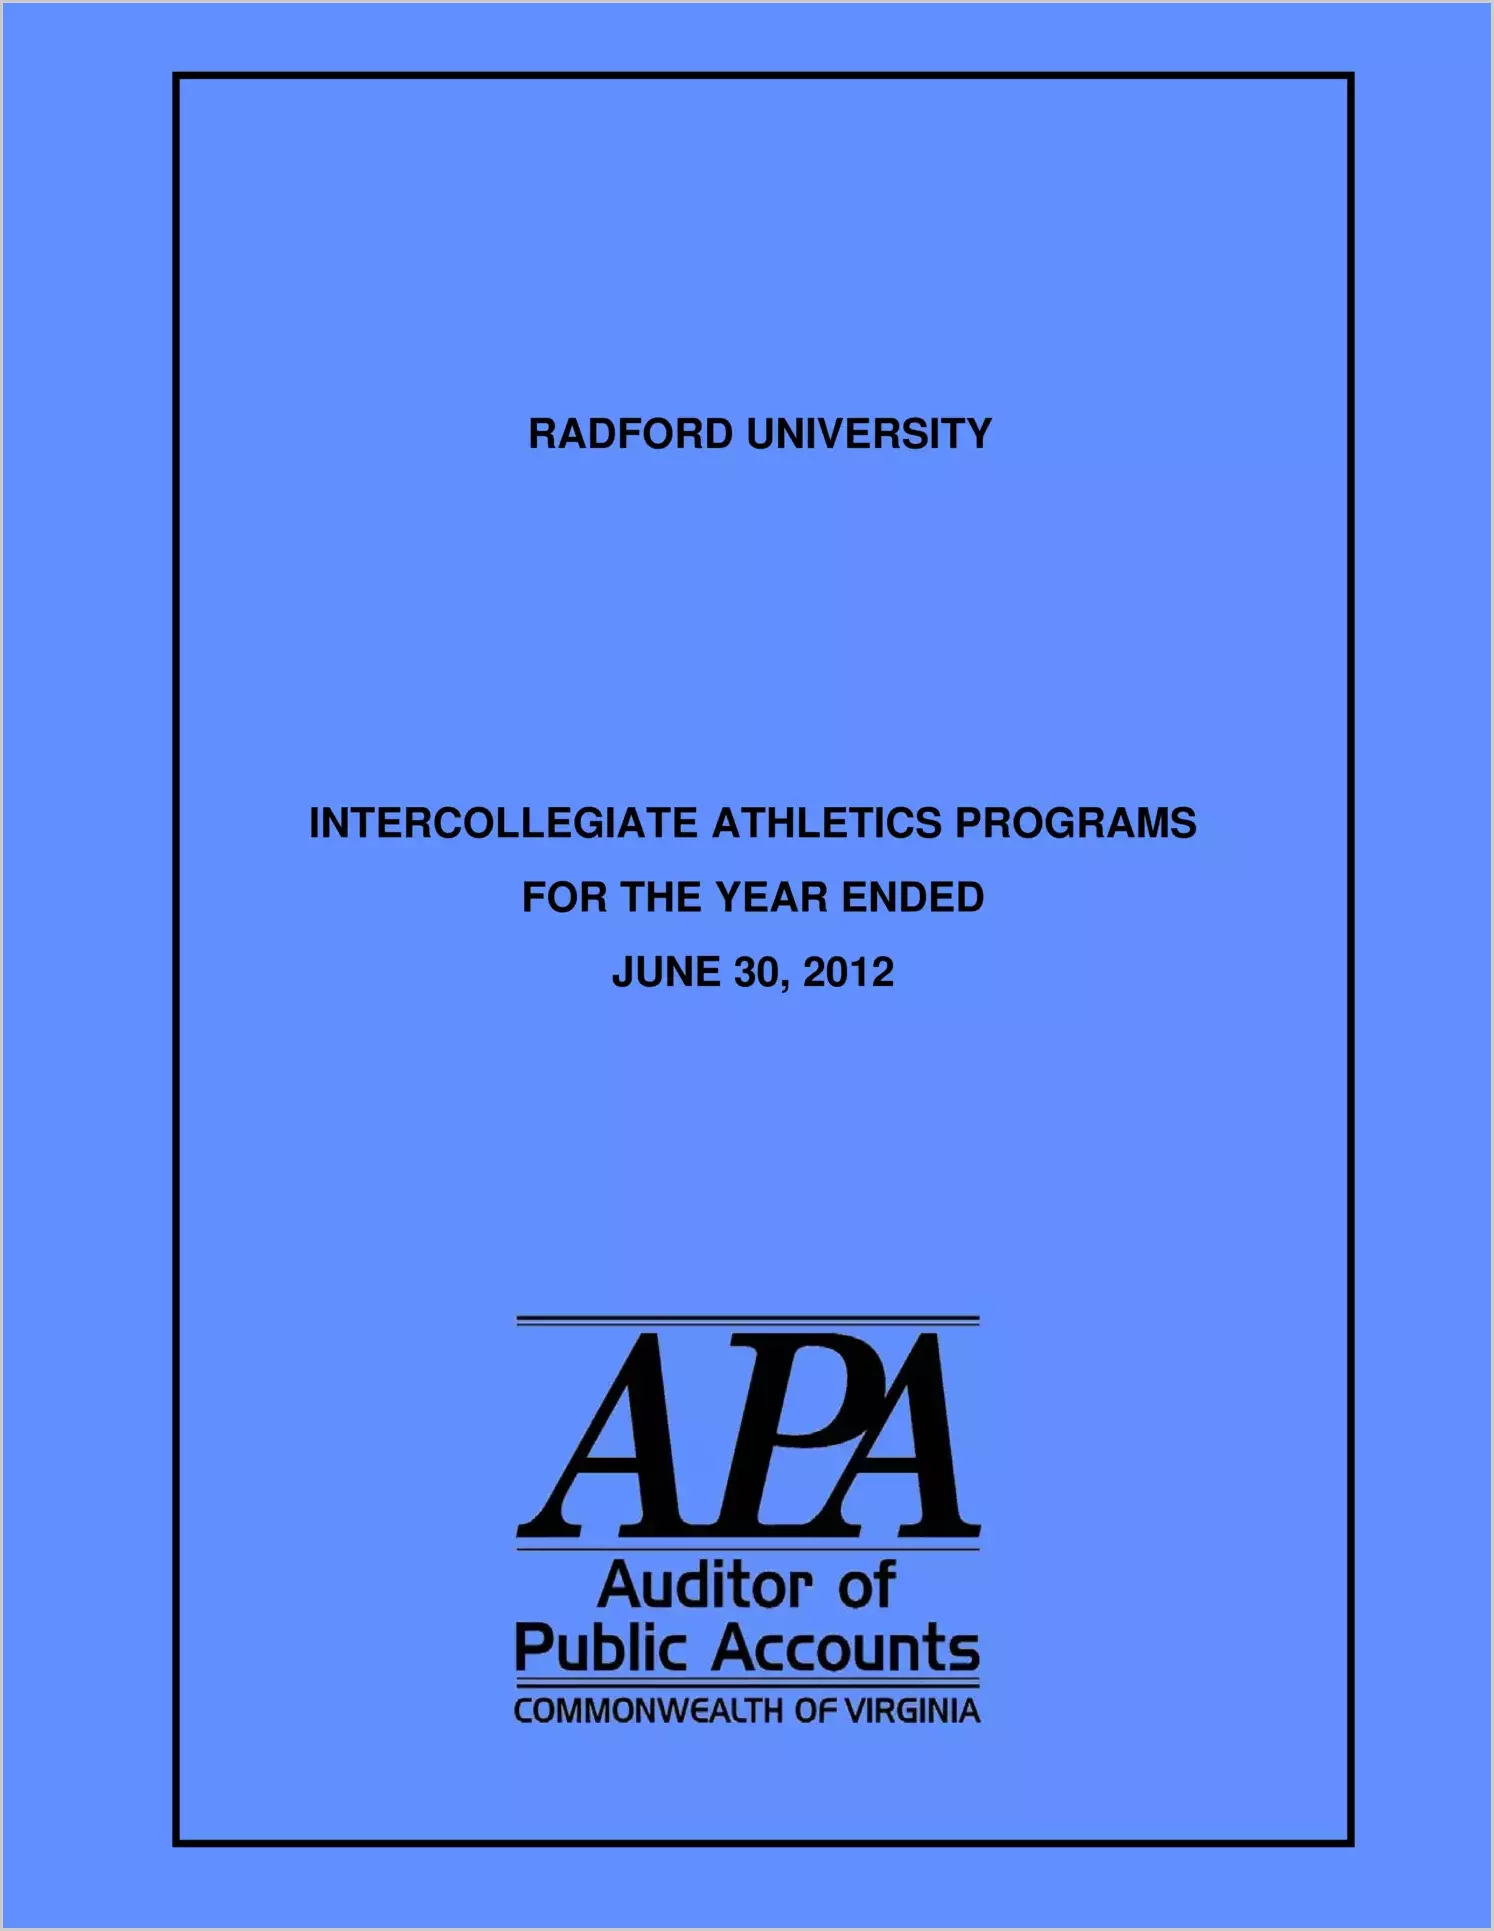 Radford University Intercollegiate Athletics Programs for the year ended June 30, 2012